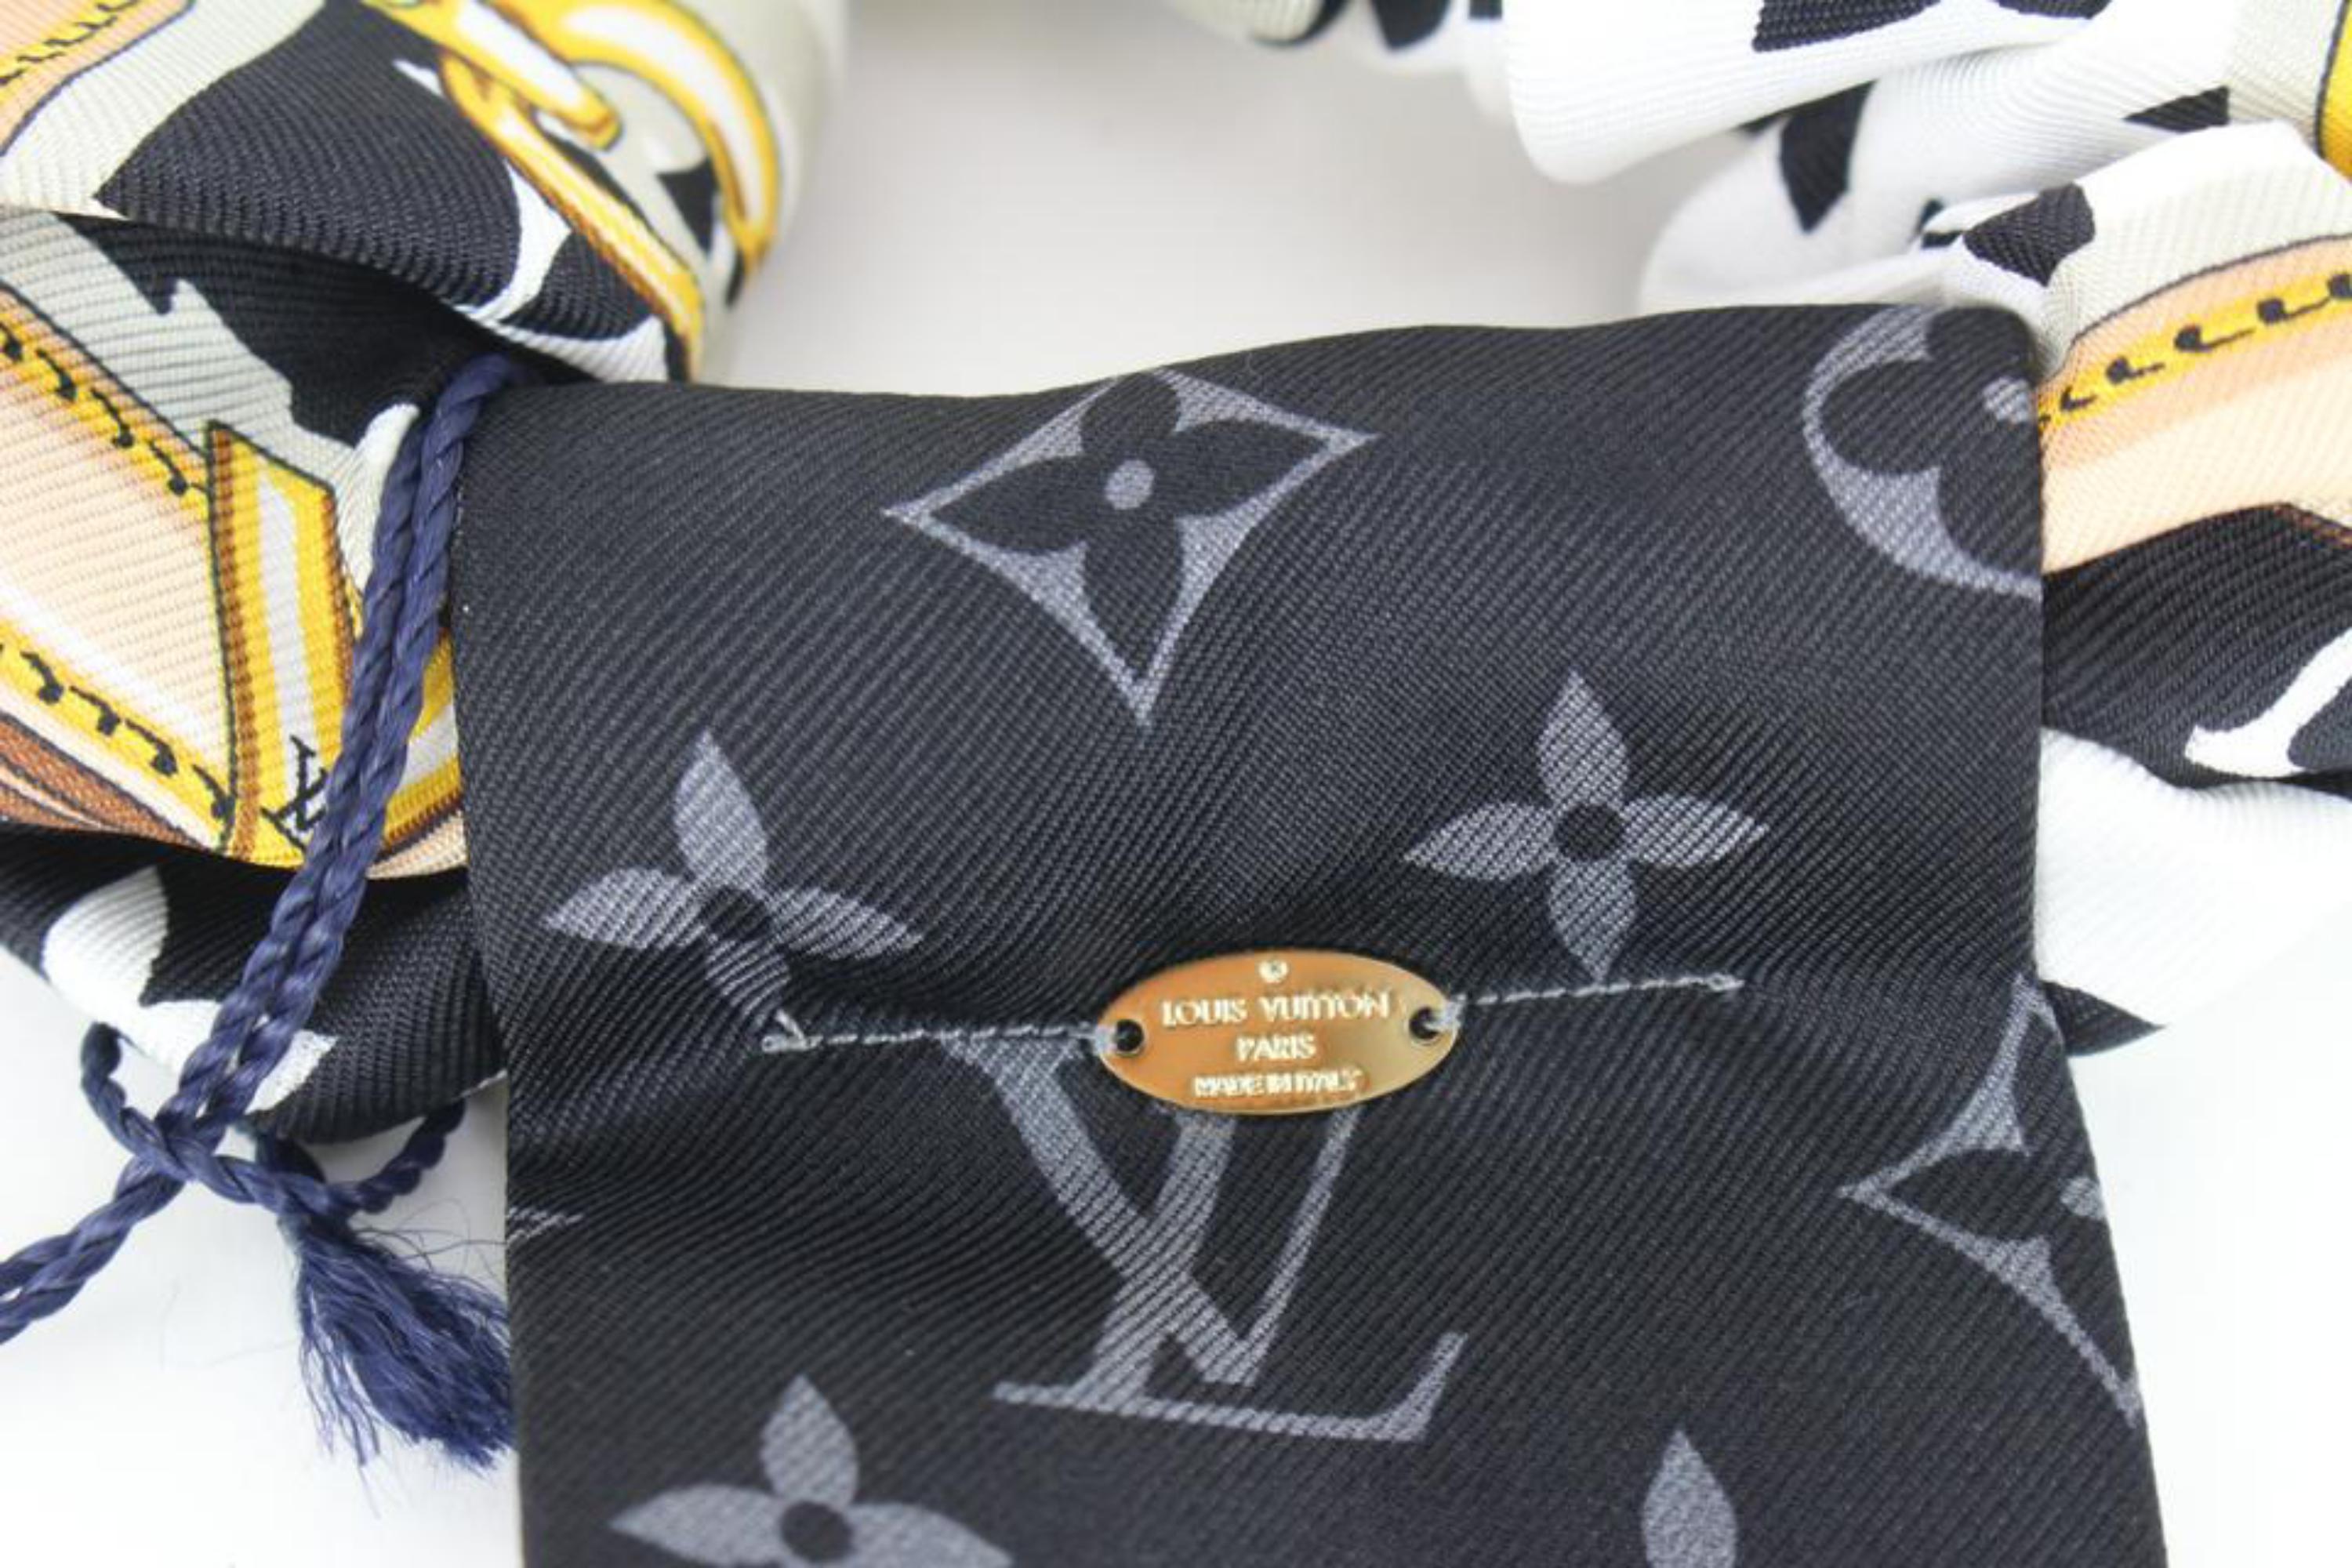 Louis Vuitton Scrunchie Be Mindful Silk Women's Hair Tie Monogram Louis  Vuitton